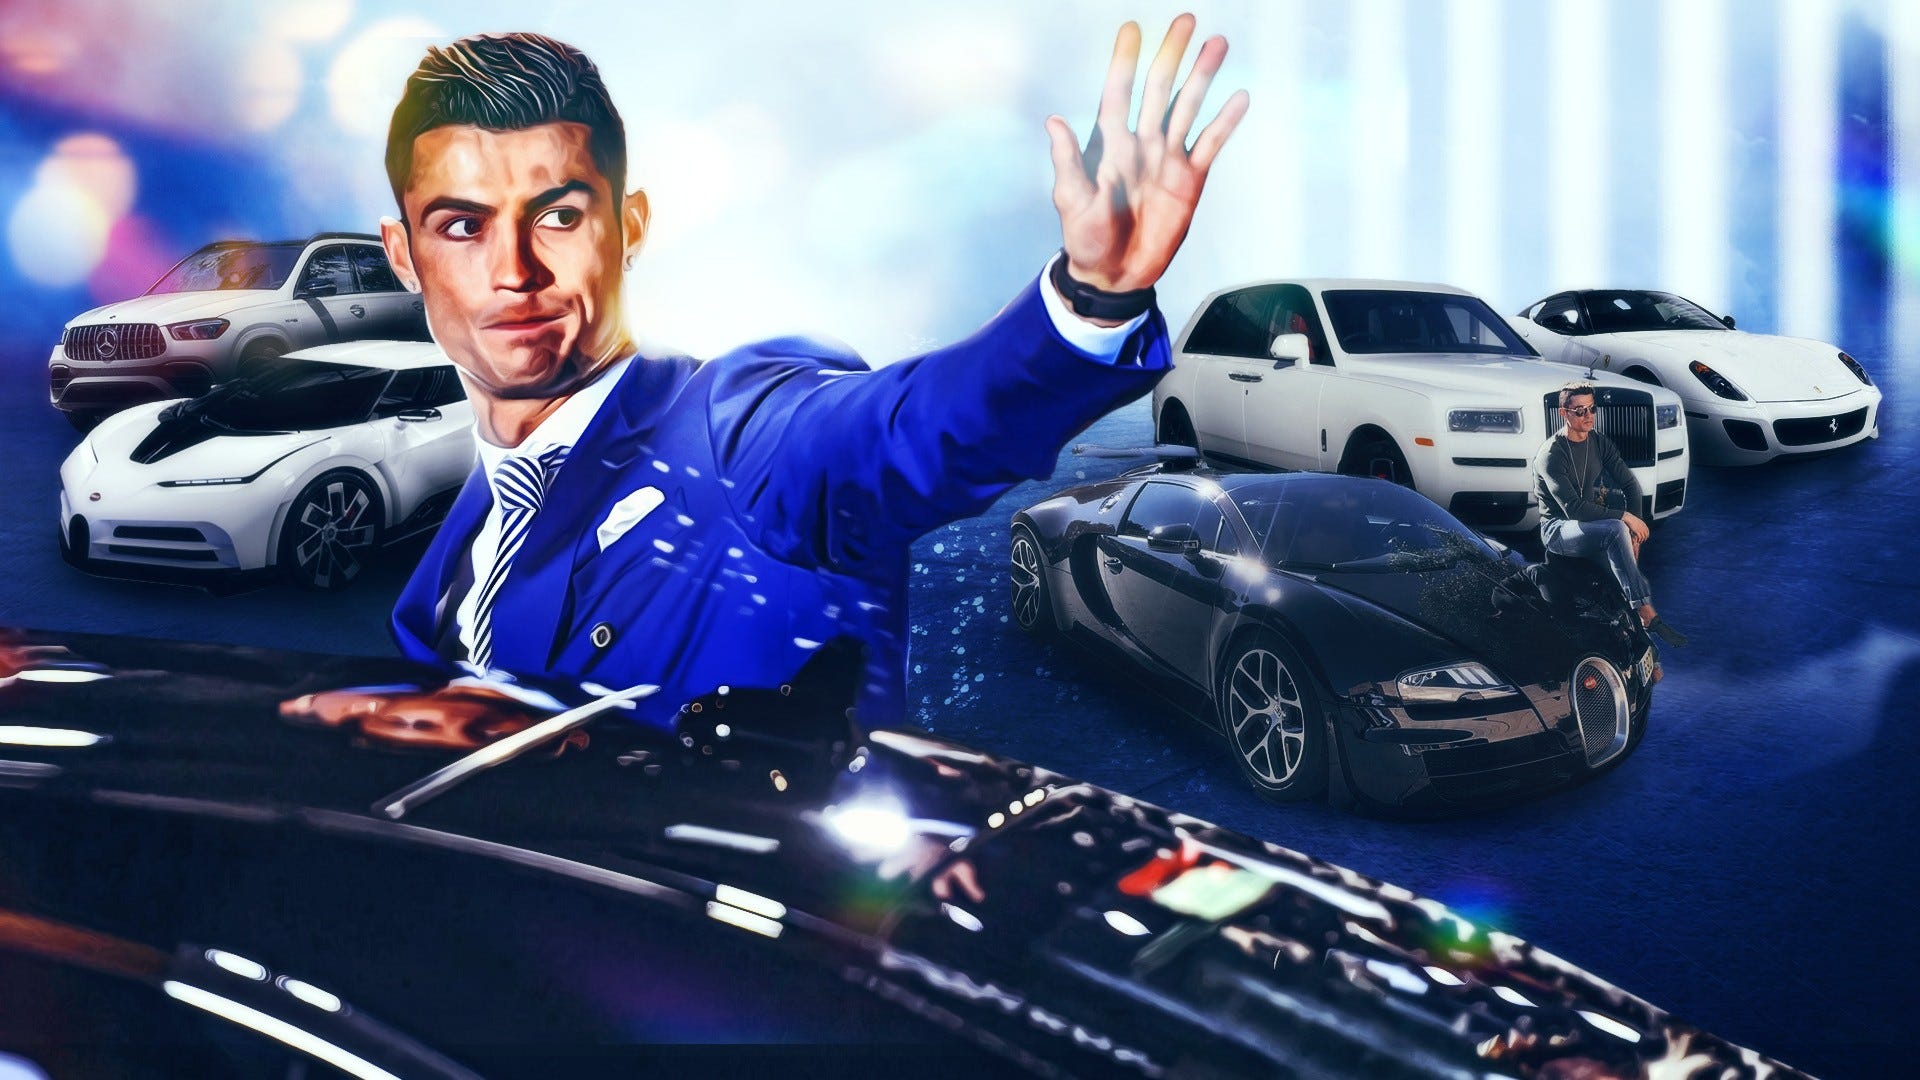 A peek into Cristiano Ronaldo's lavish car collection - From Bugattis to  McLaren Senna  US